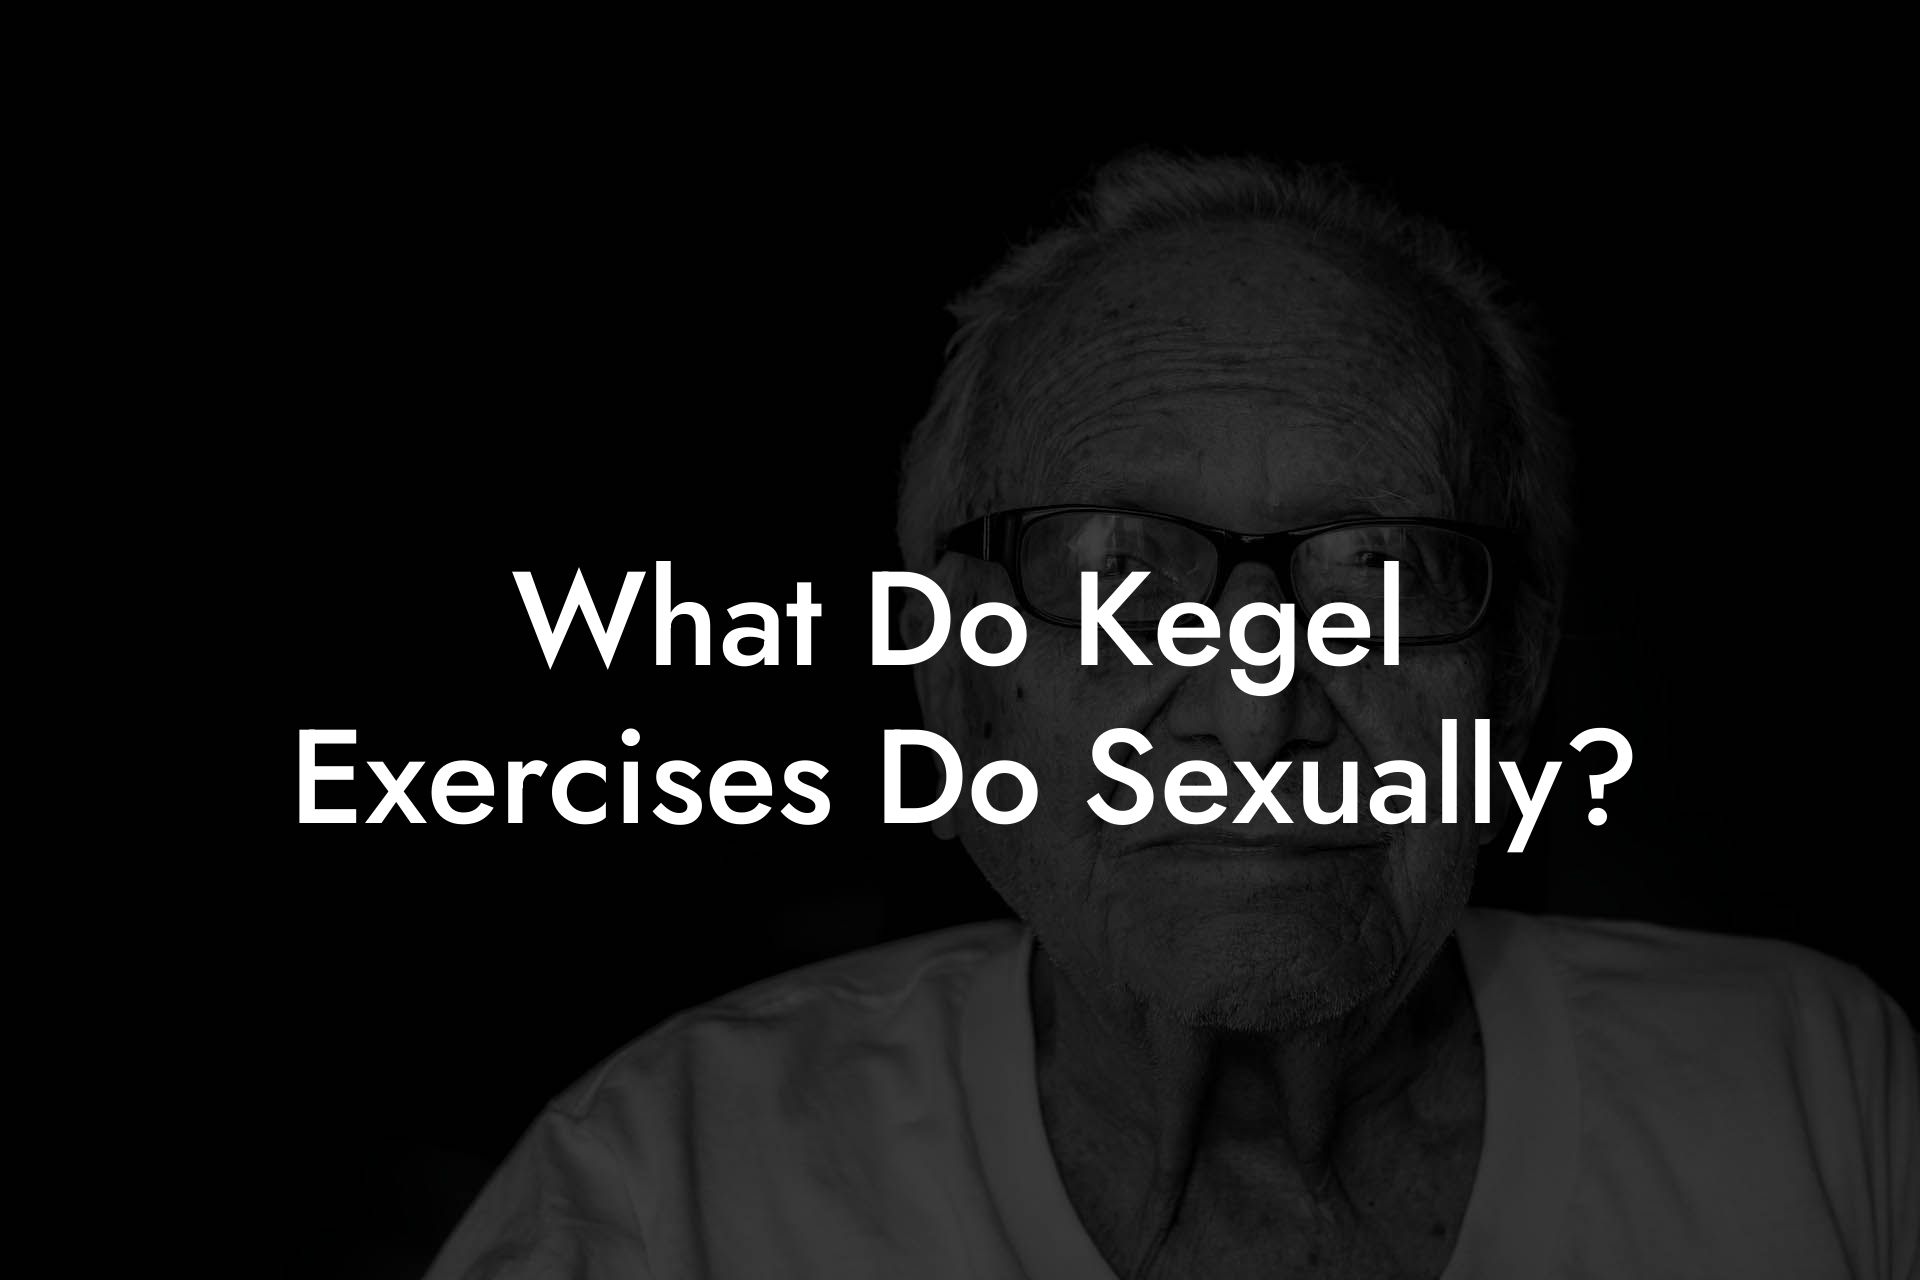 What Do Kegel Exercises Do Sexually?